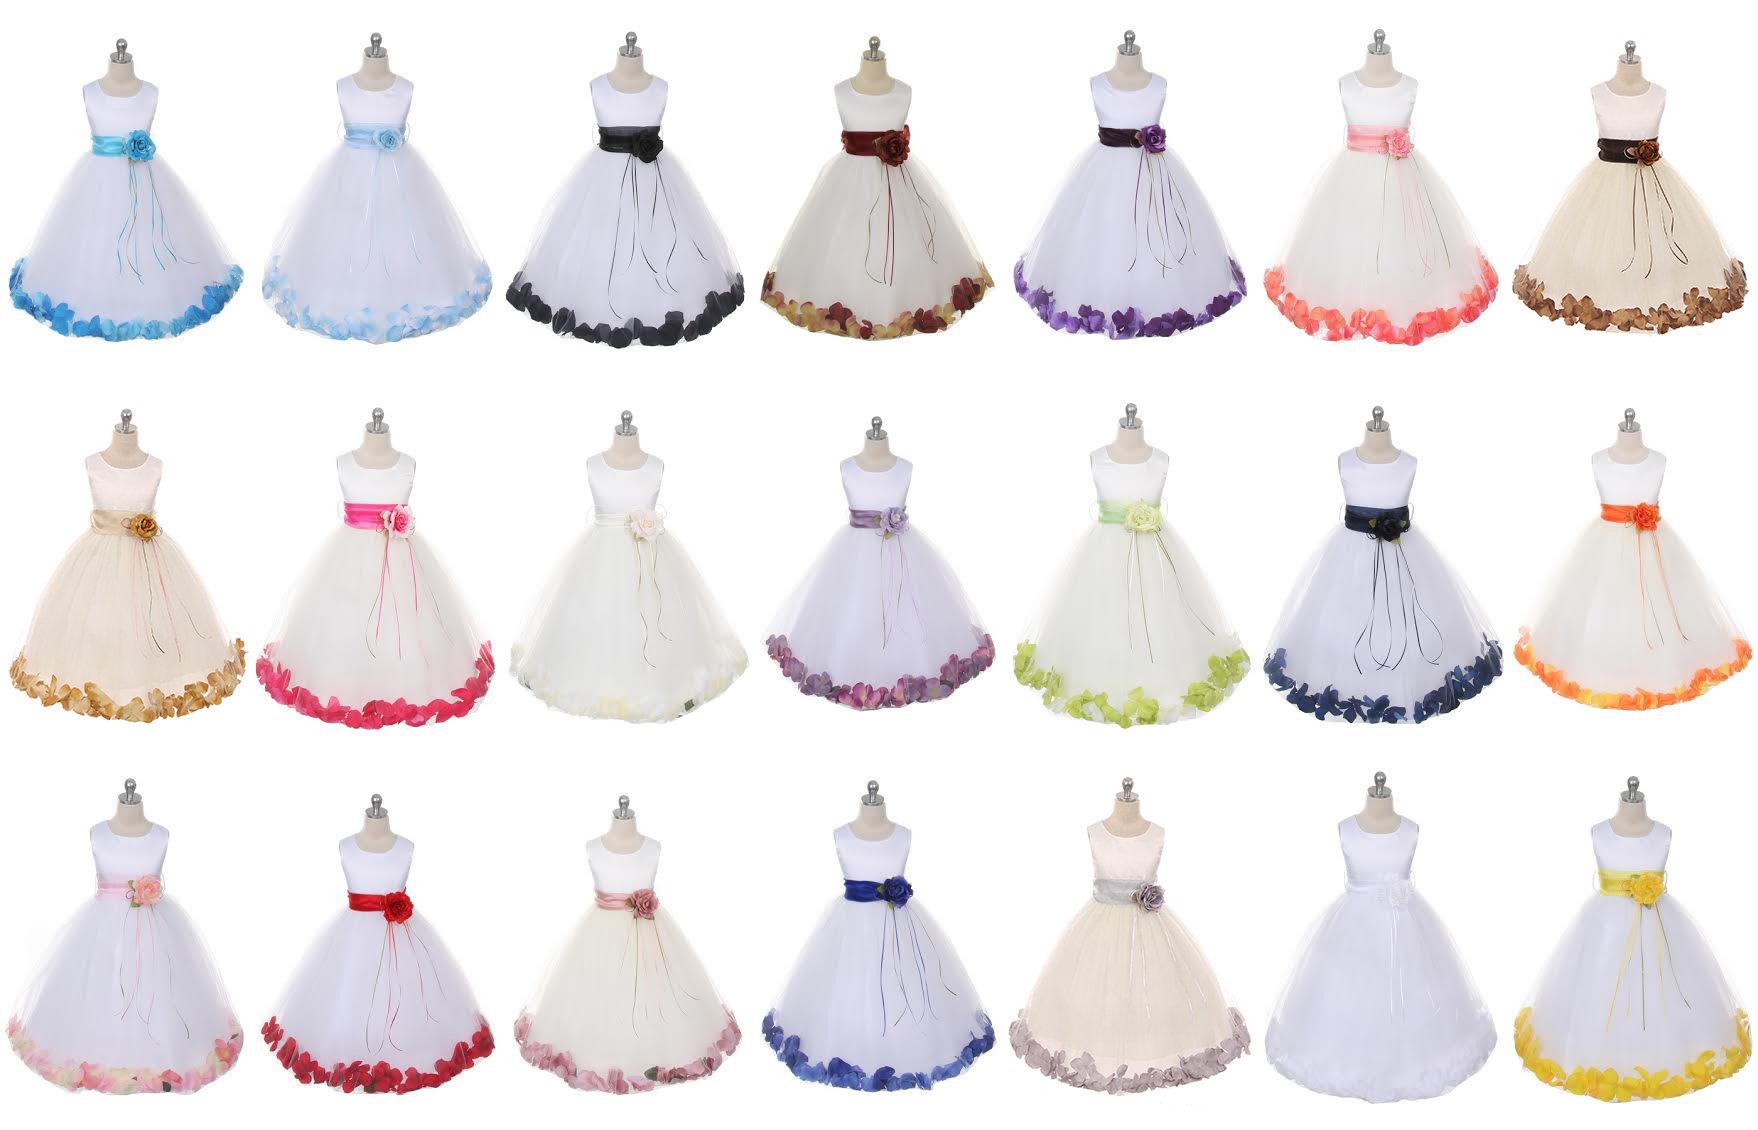 Dress - Flower Petal Dress W/ Sash (White Dress) 2of2